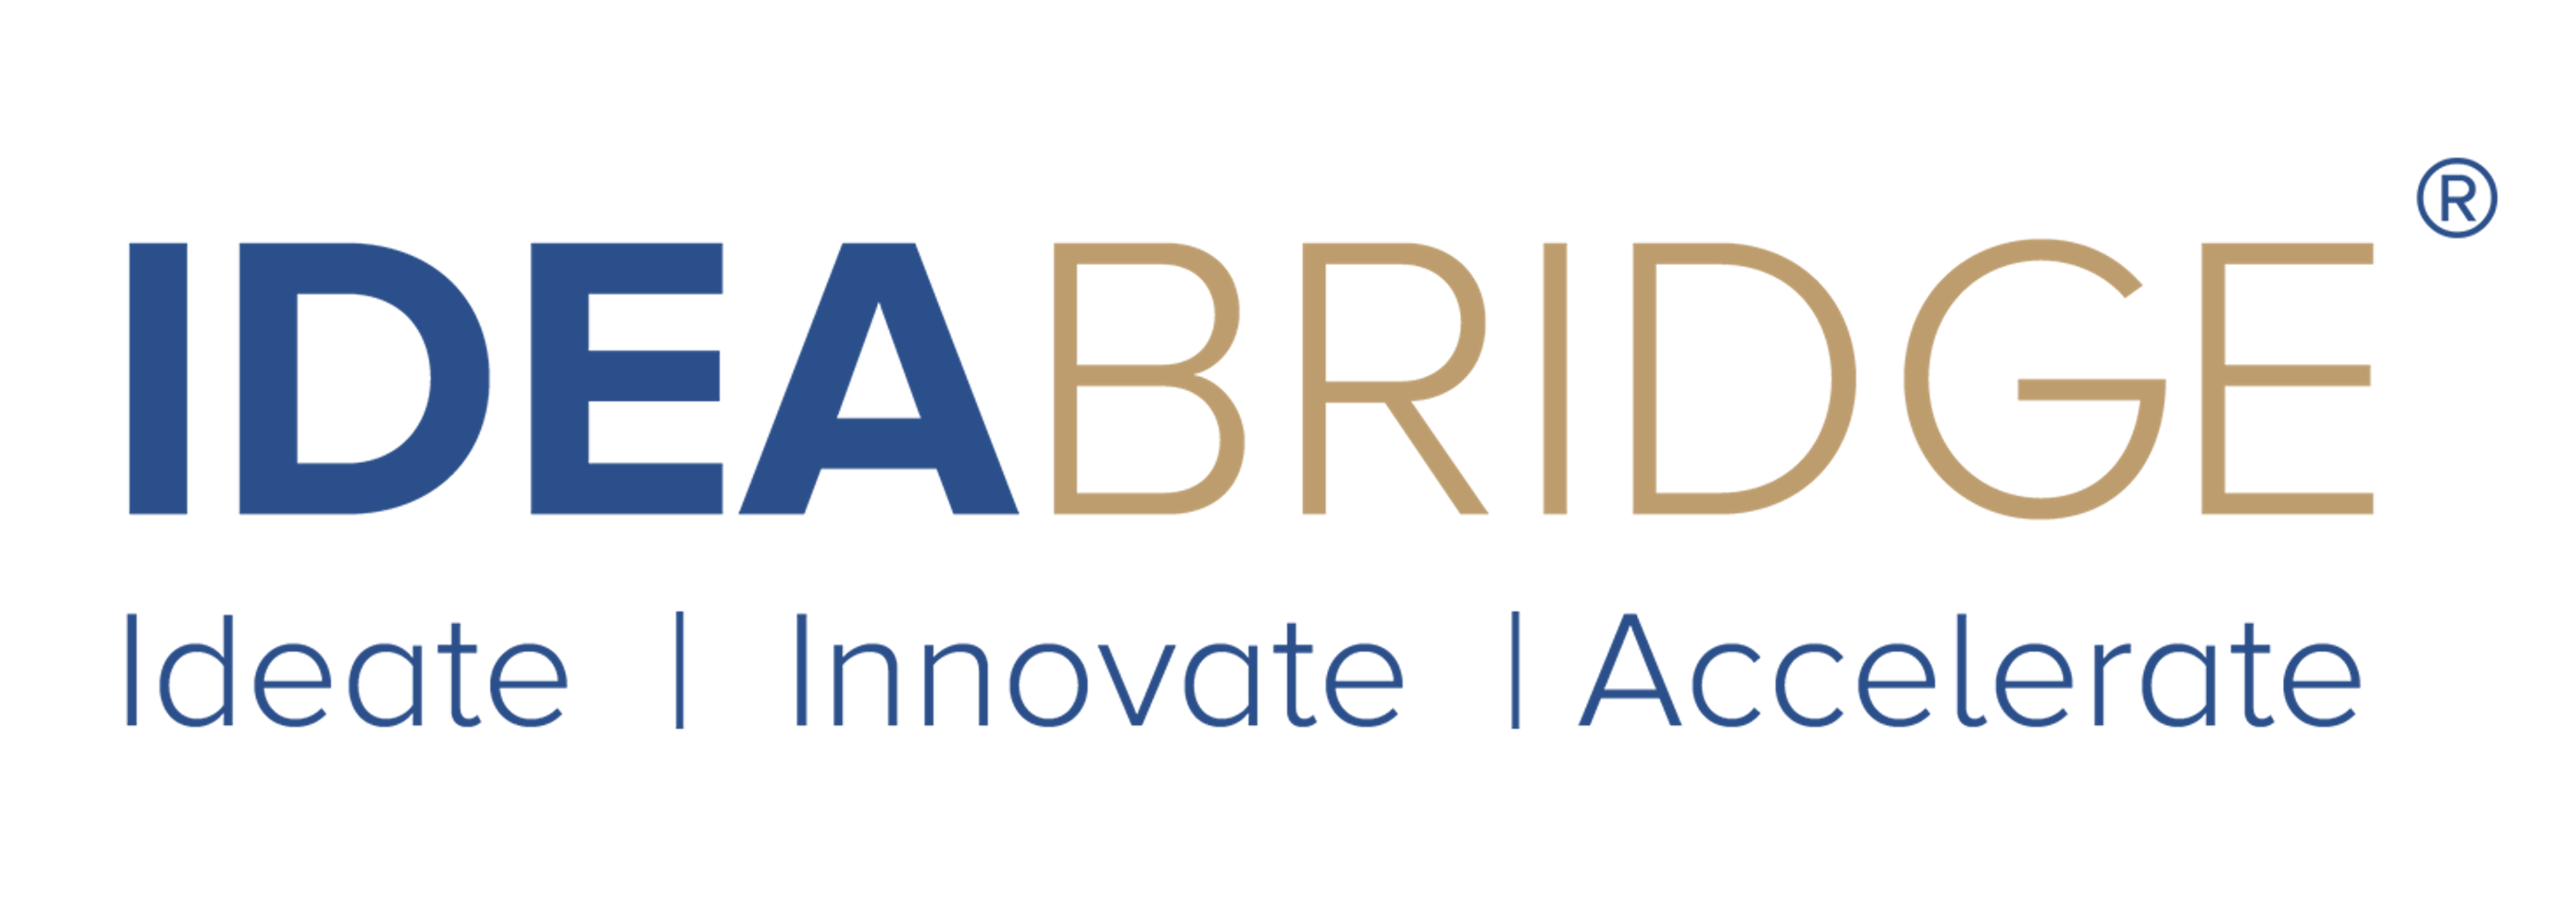 IdeaBridge Logo